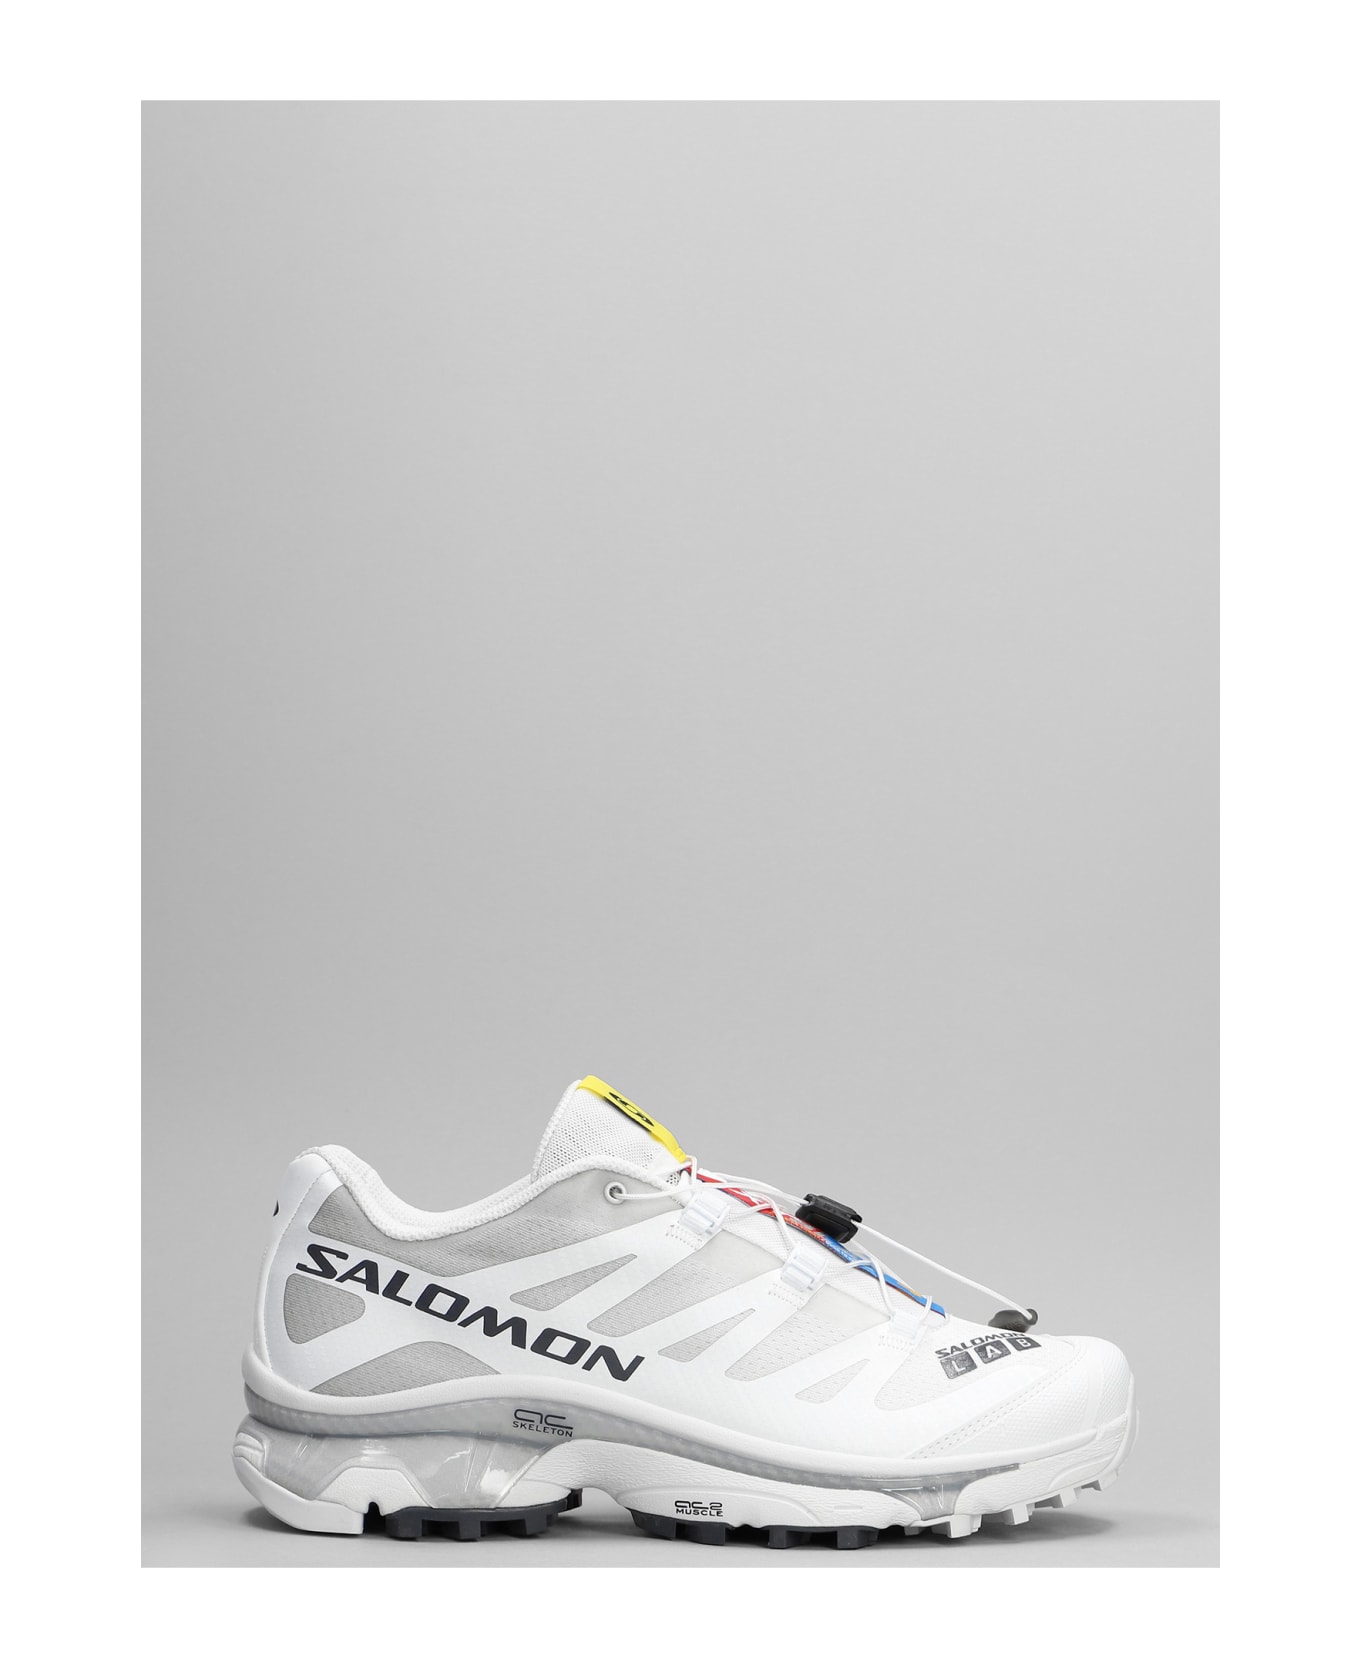 Salomon Xt-4 Og Sneakers In White Synthetic Fibers - White/ebony/lunar rock